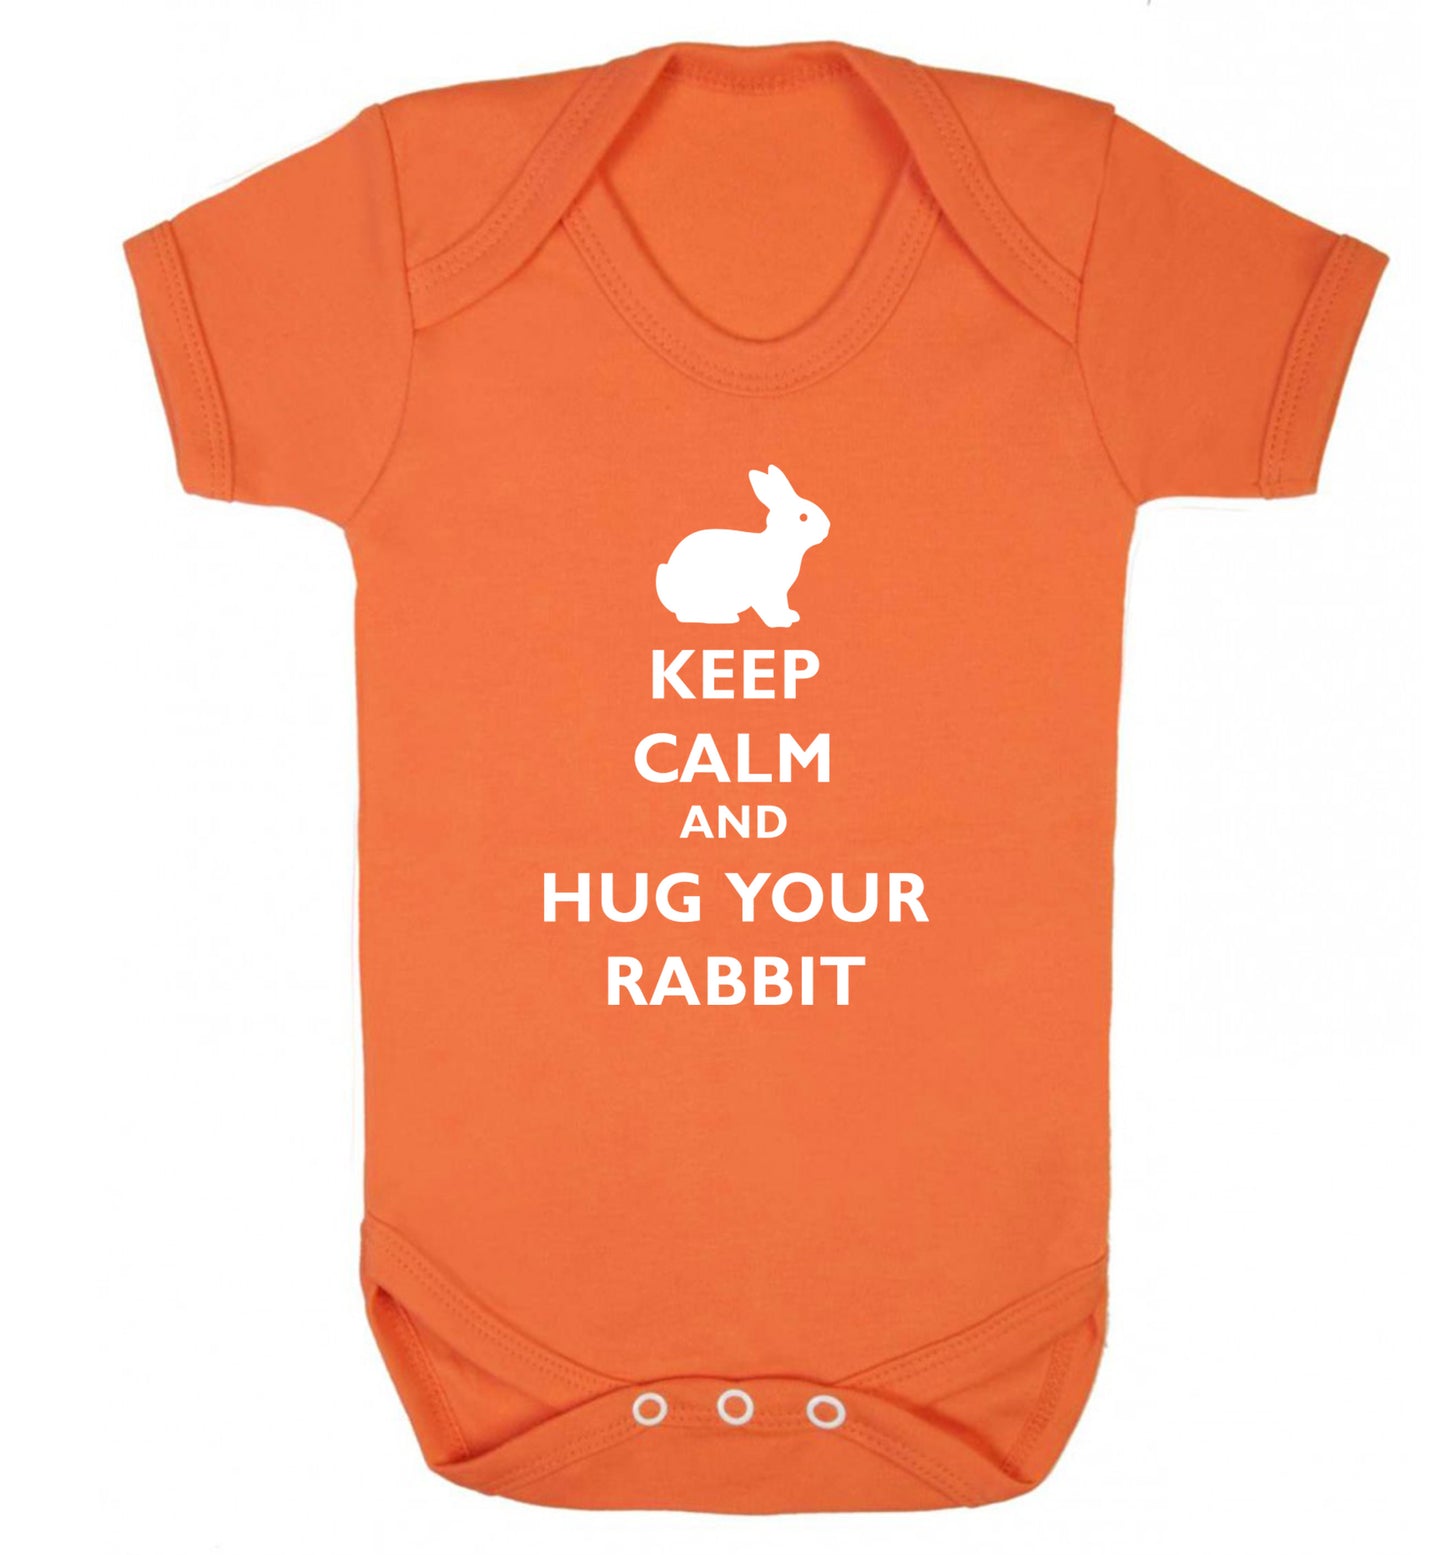 Keep calm and hug your rabbit Baby Vest orange 18-24 months